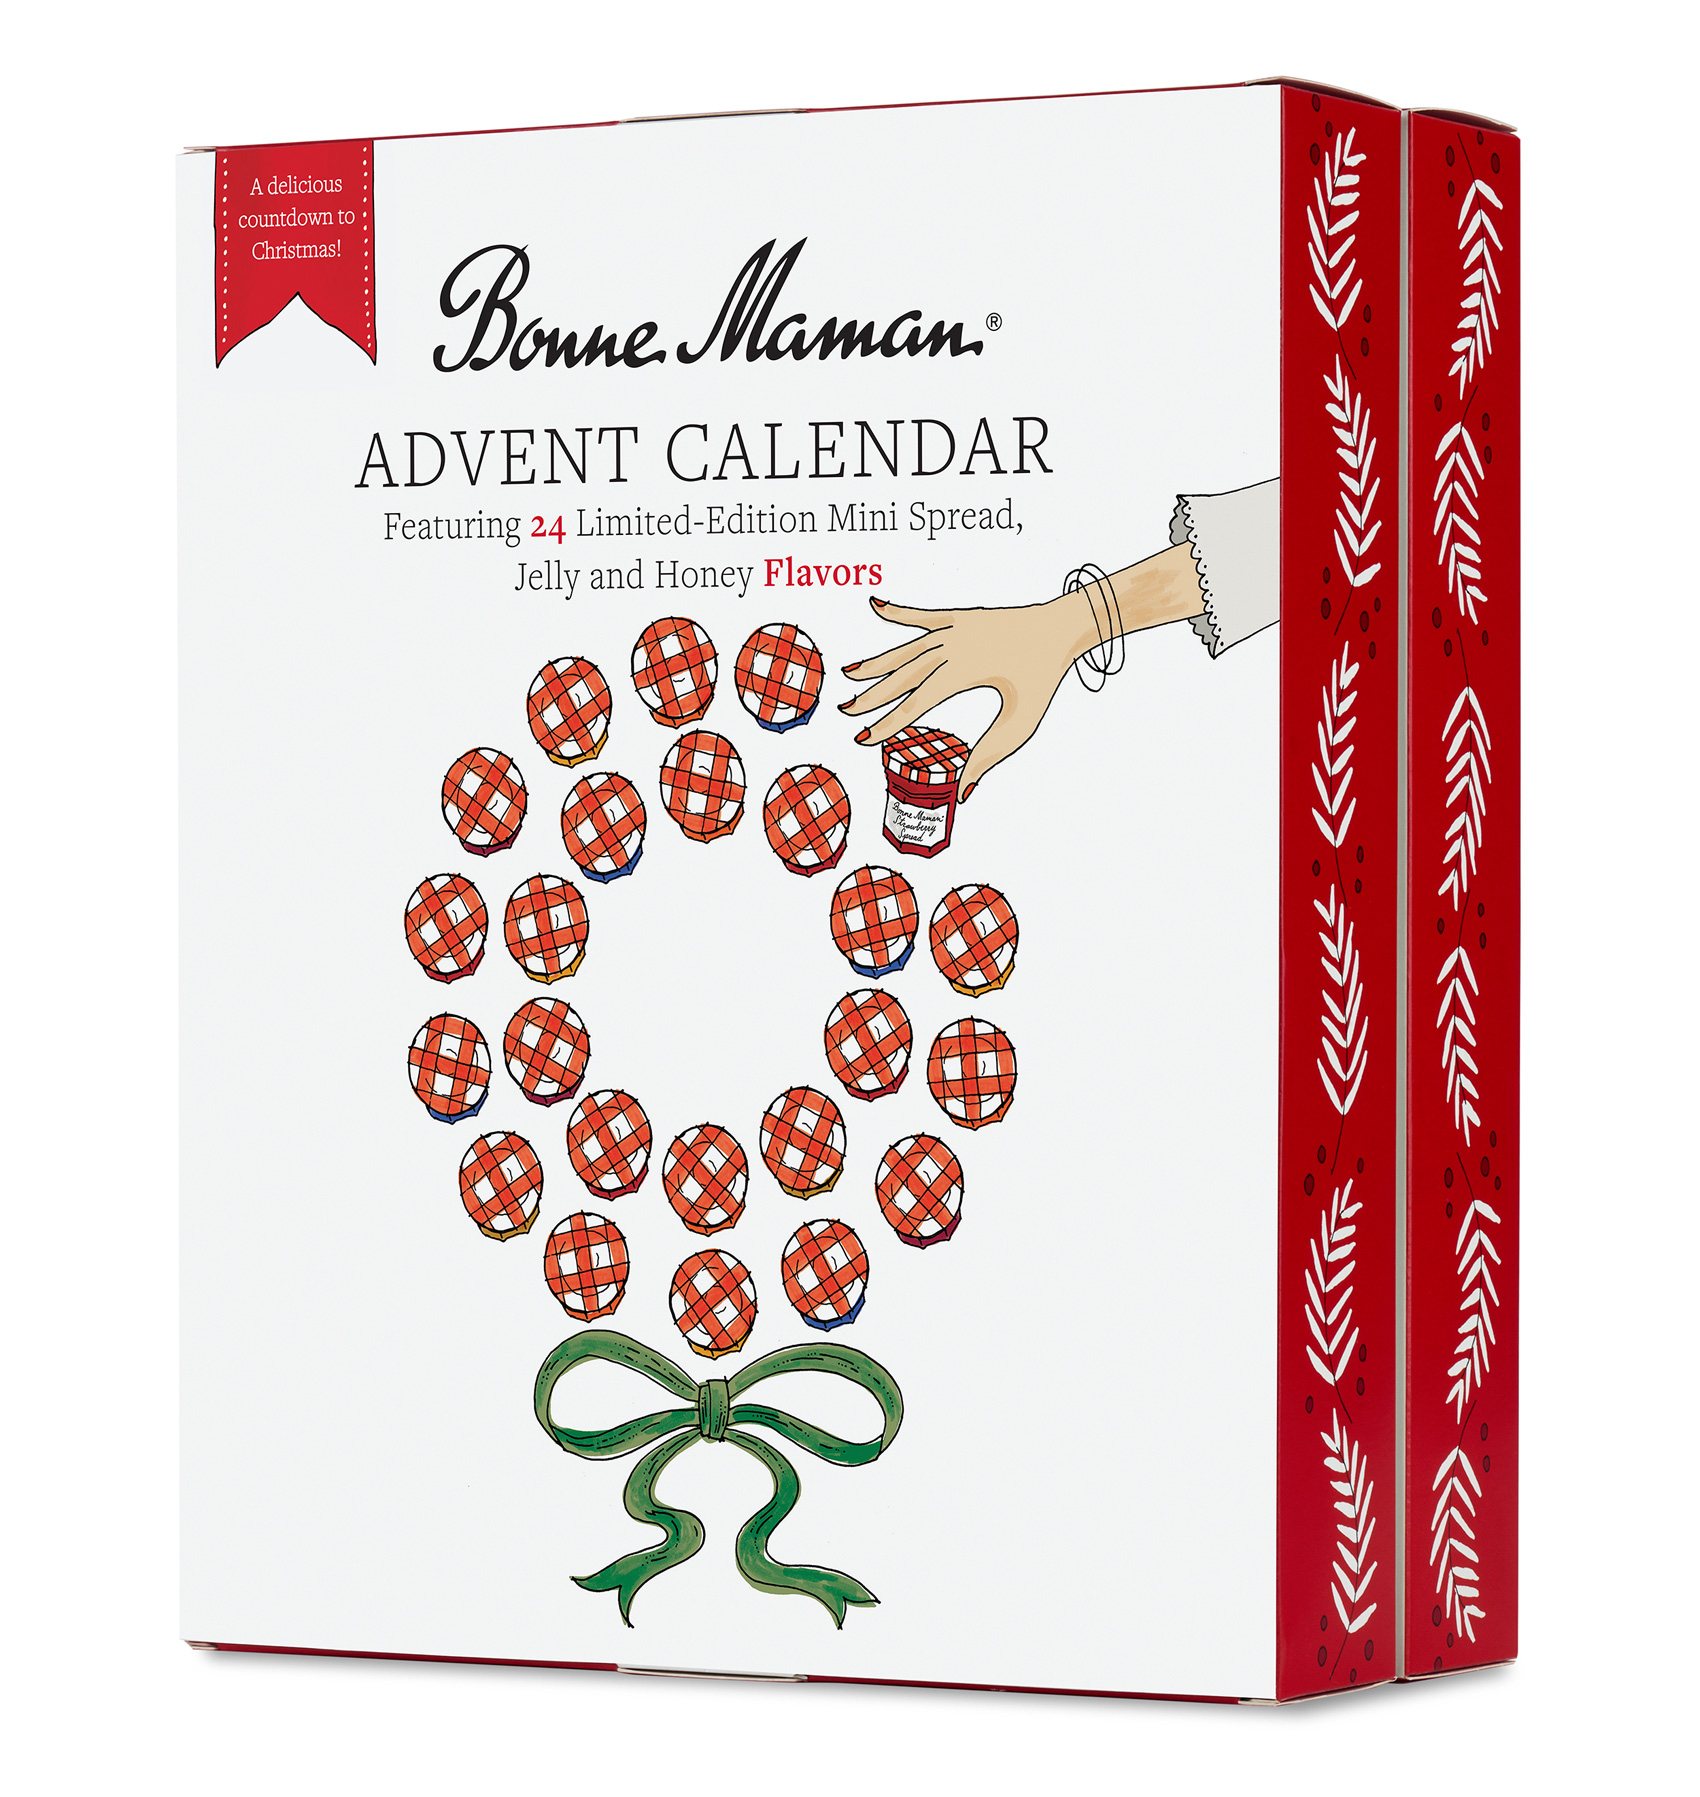 I Reviewed the Viral Bonne Maman Advent Calendar Full of Jam